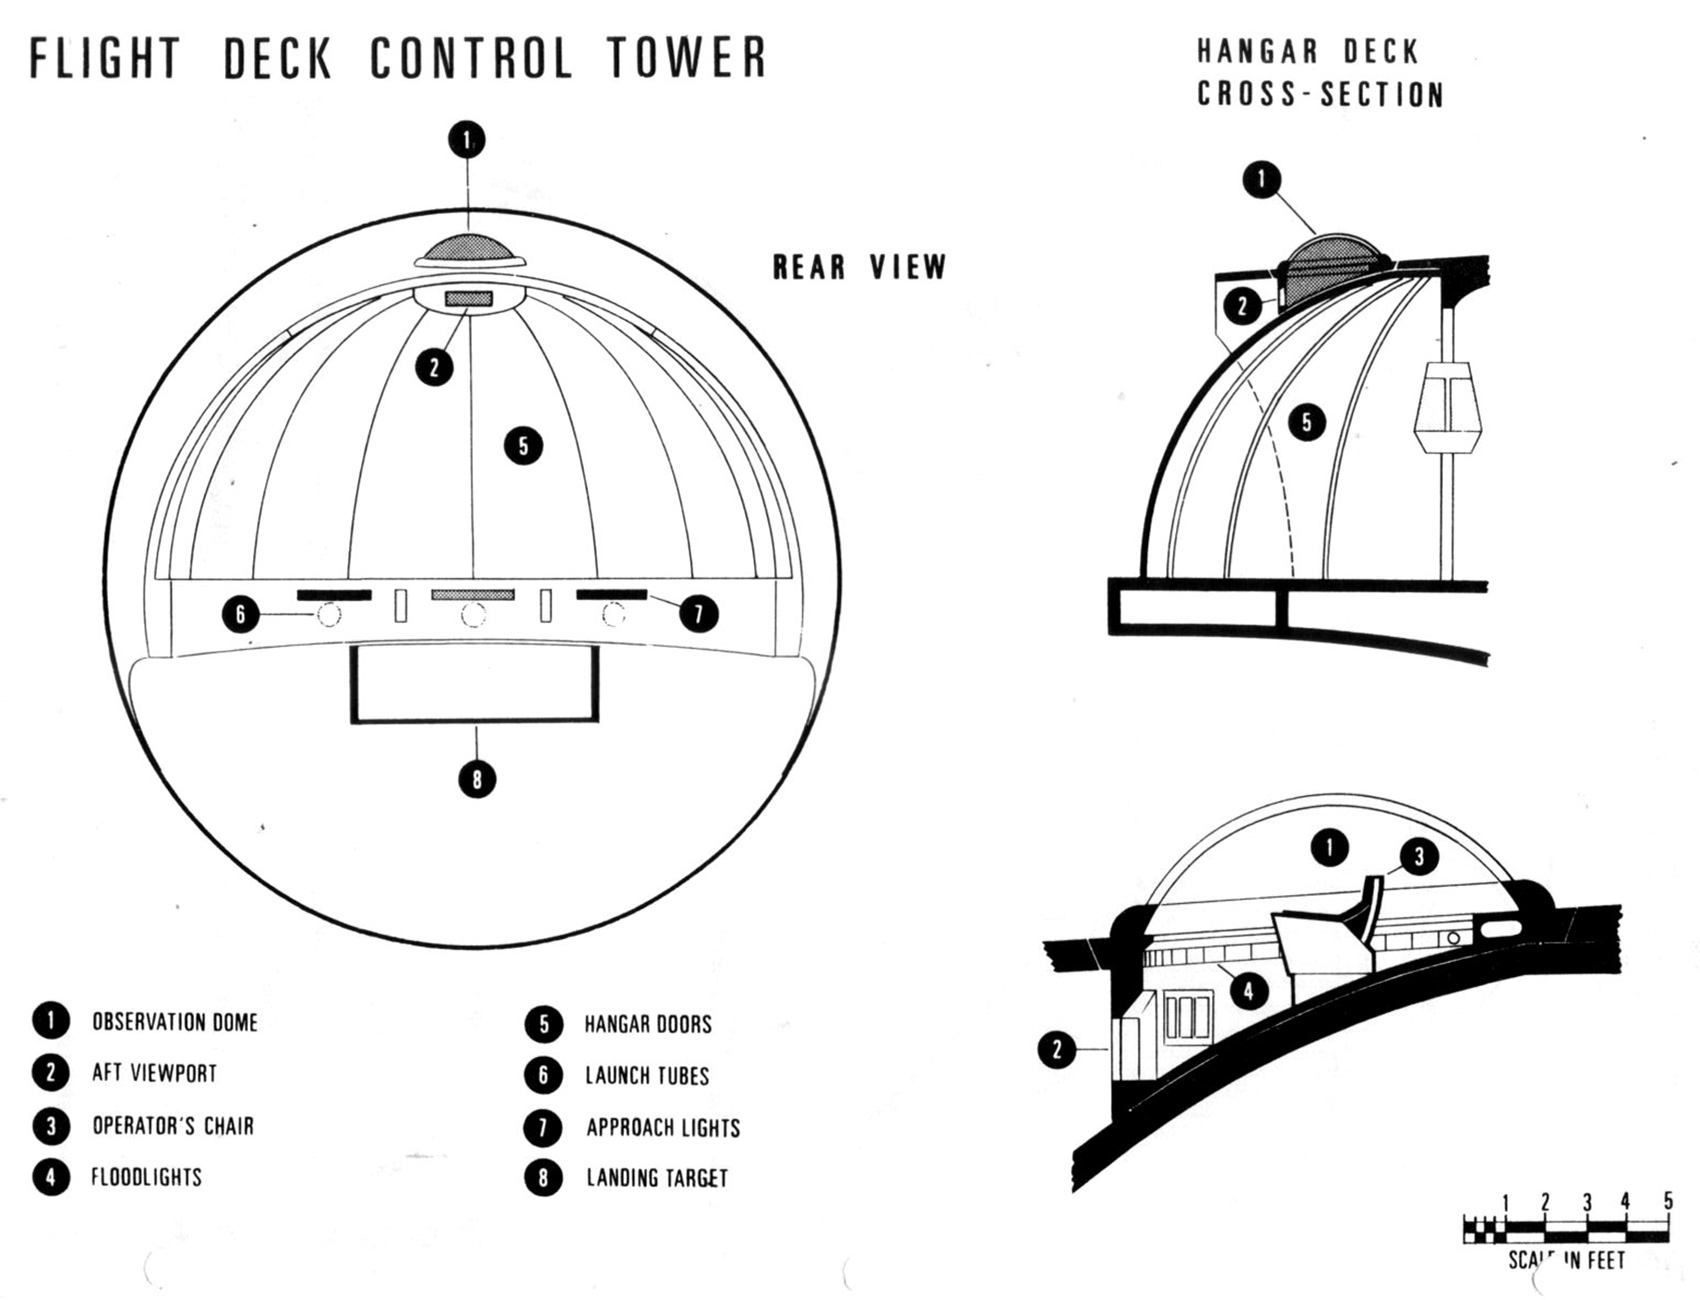 Enterprise flight deck control tower